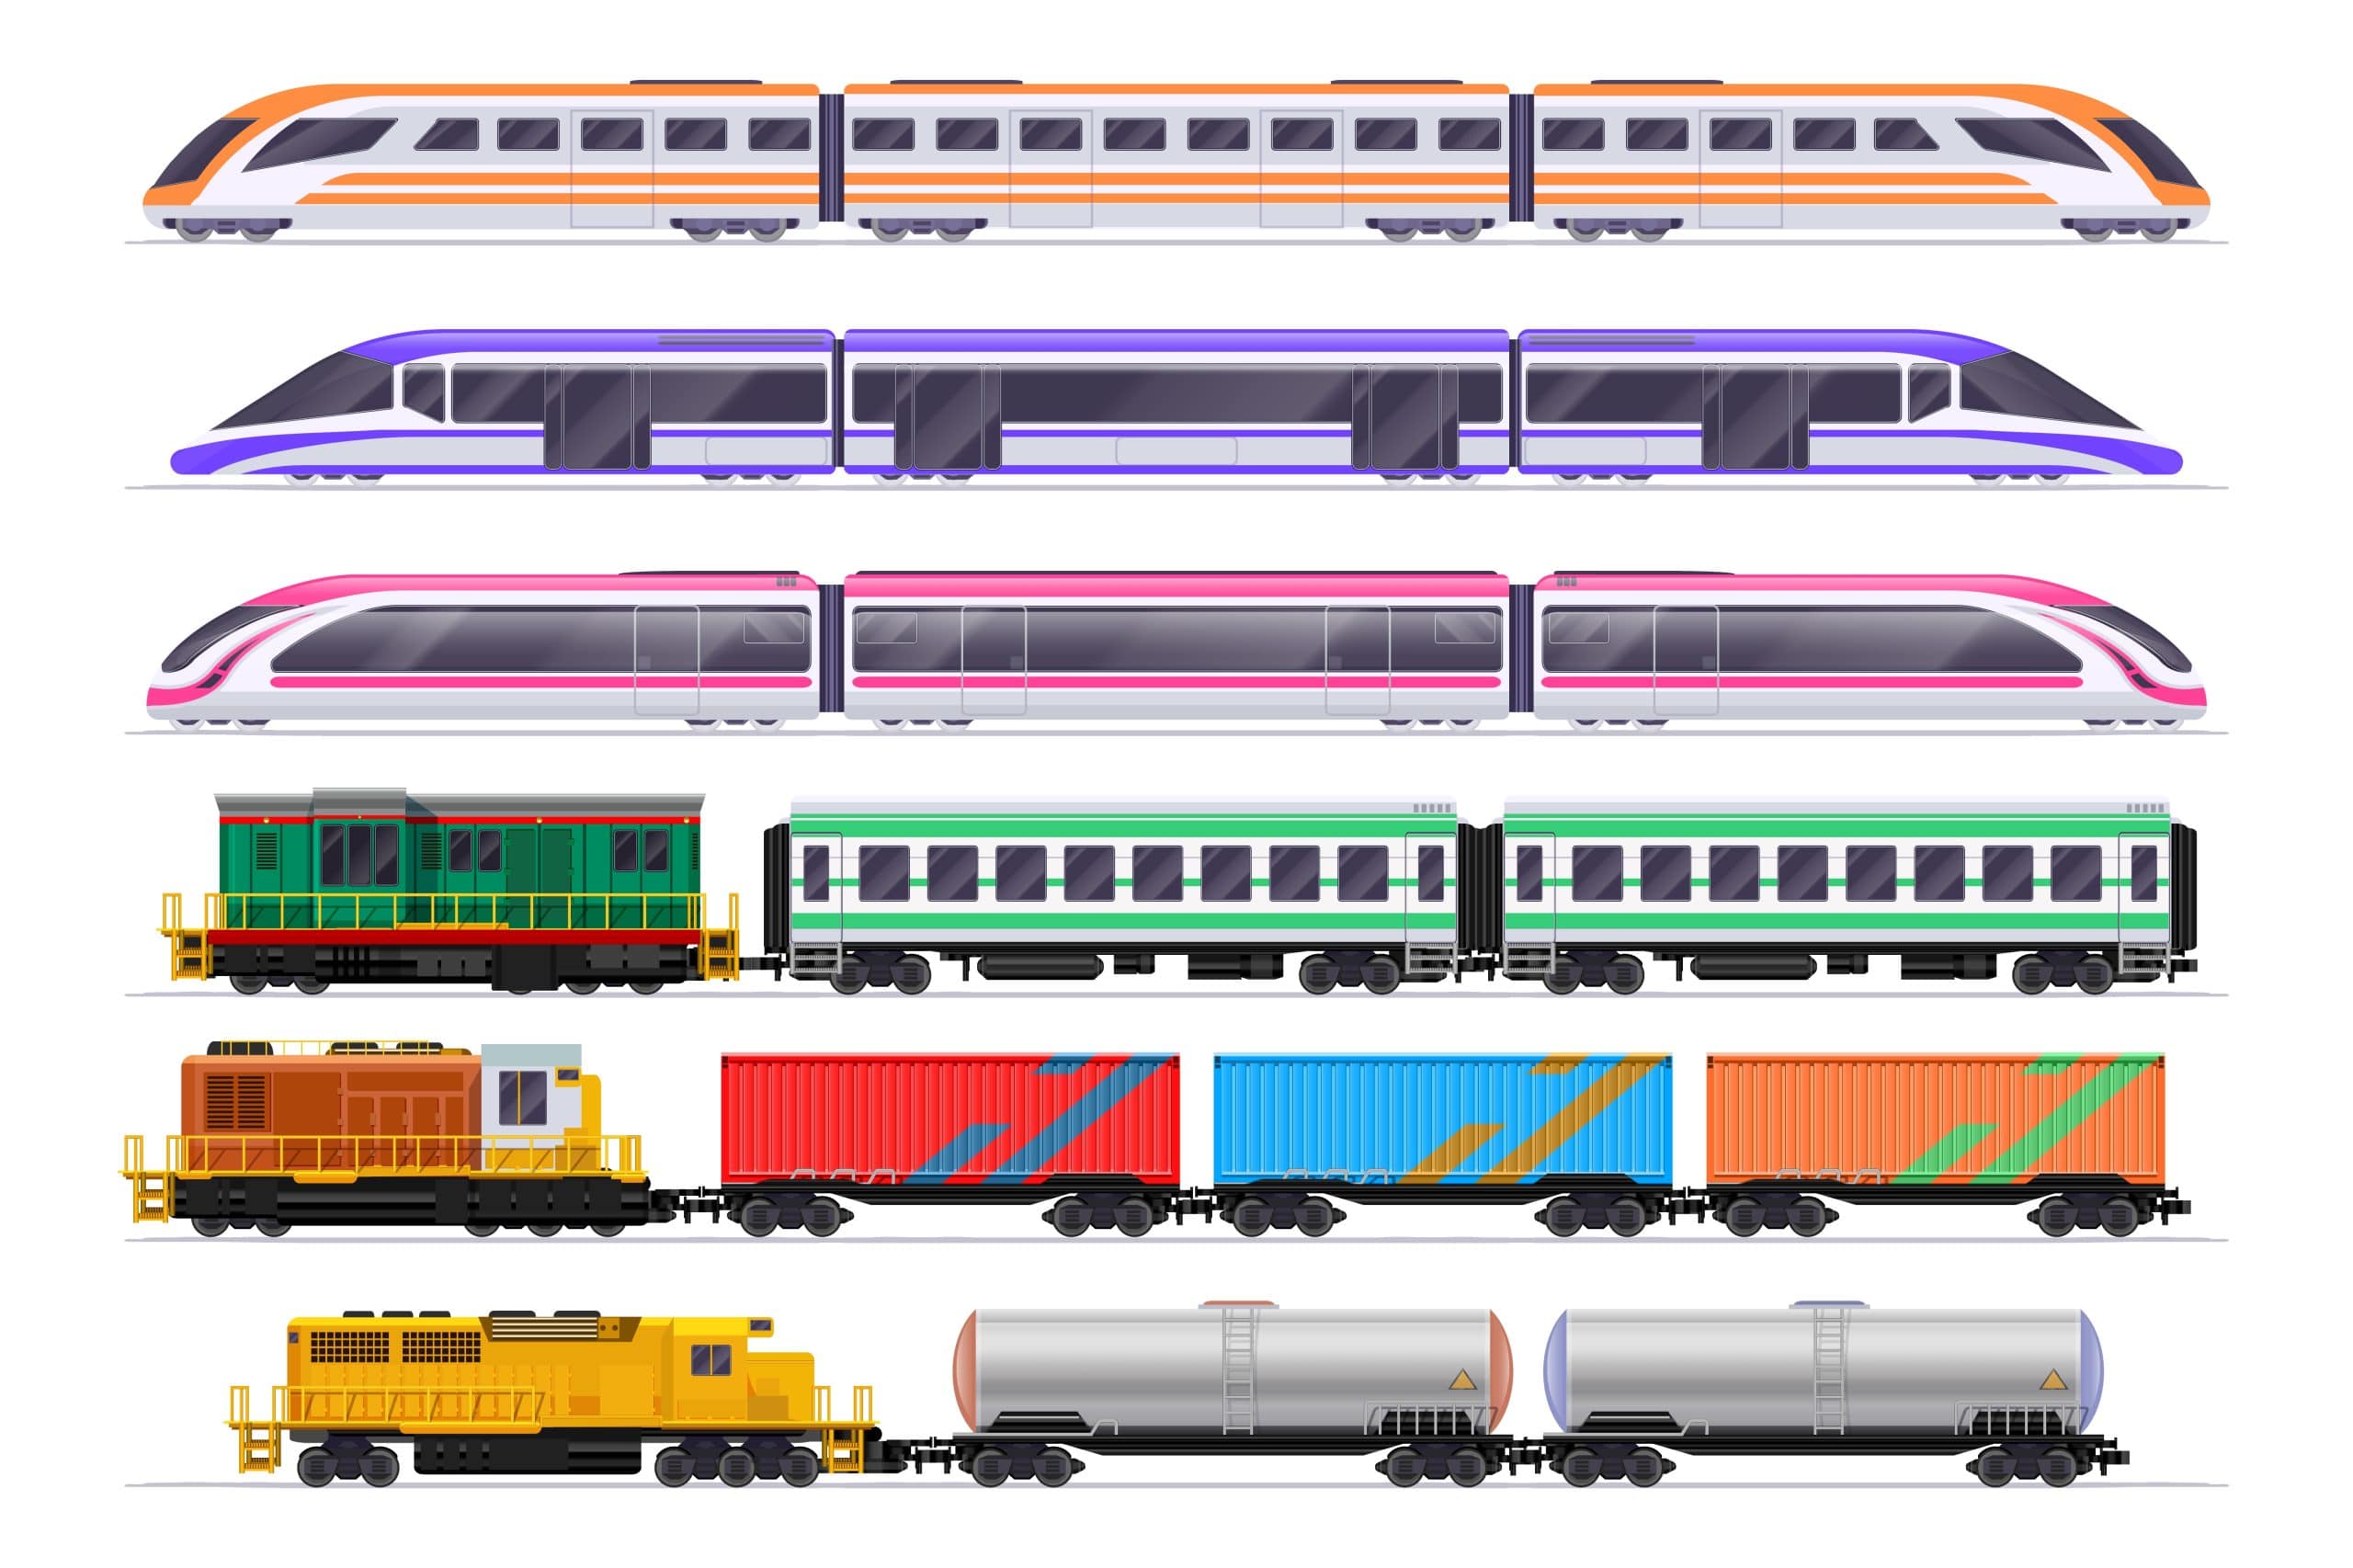 Different Trains